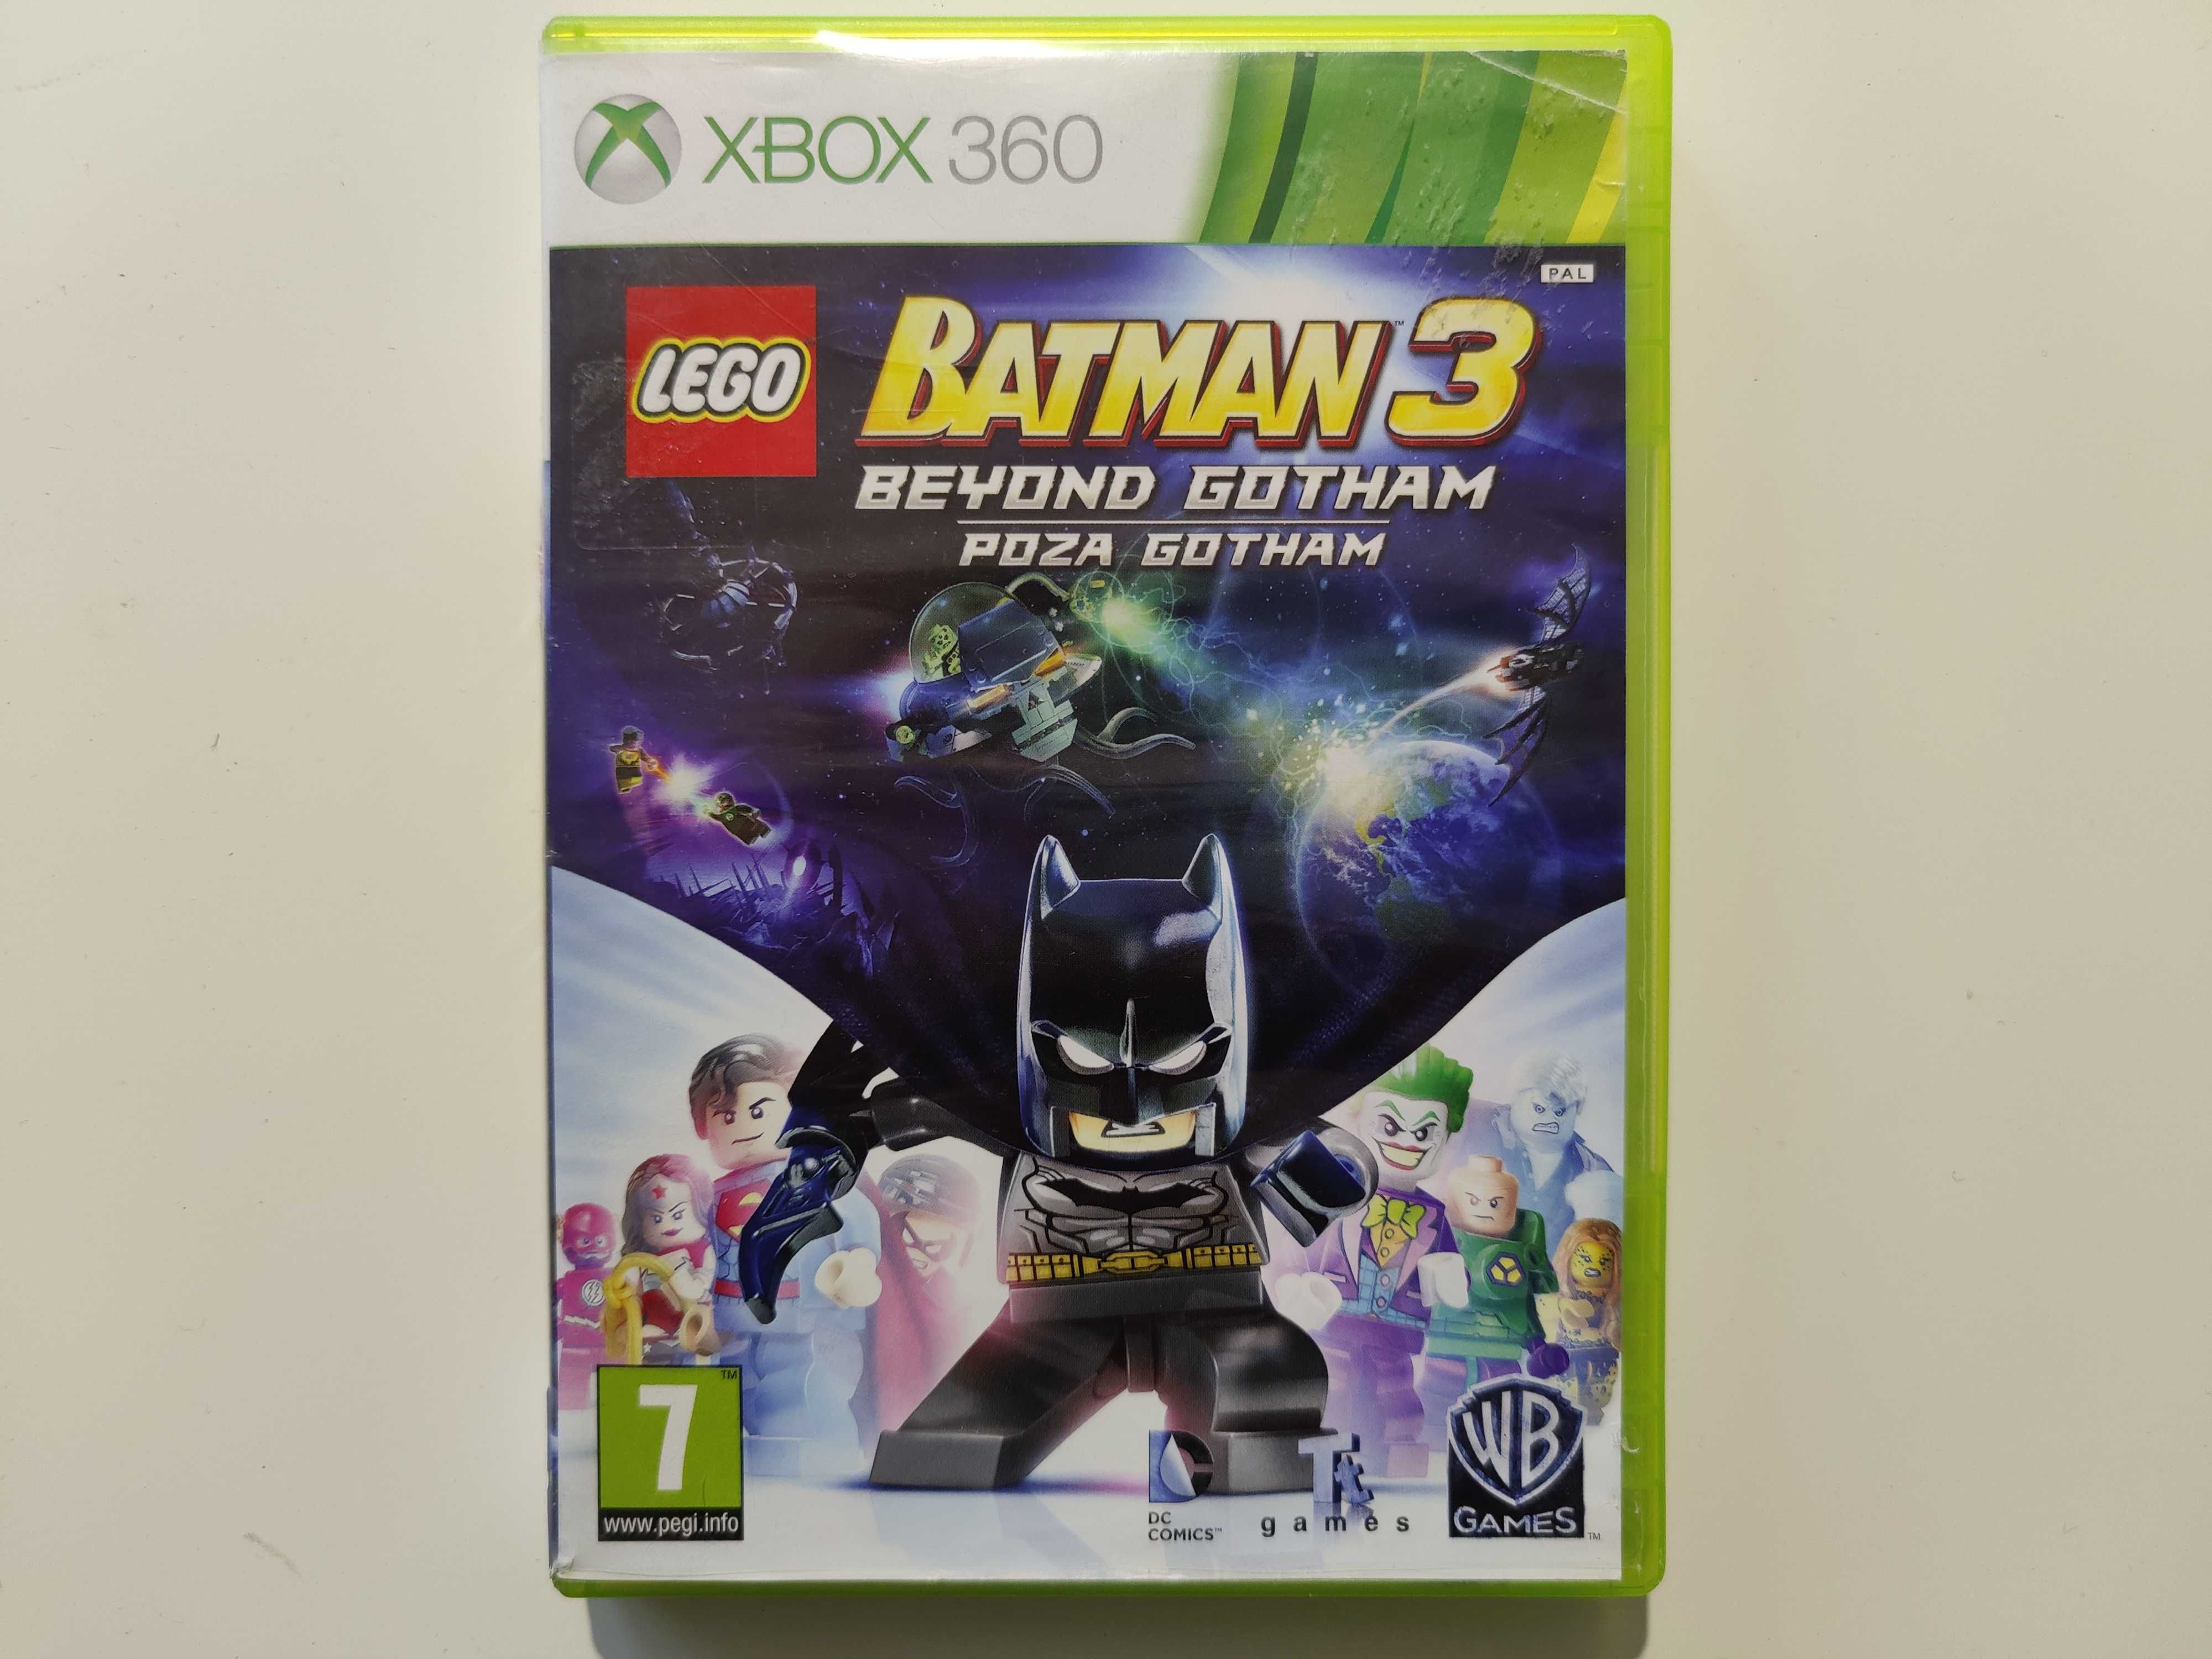 LEGO Batman 3 Poza Gotham PL Xbox 360